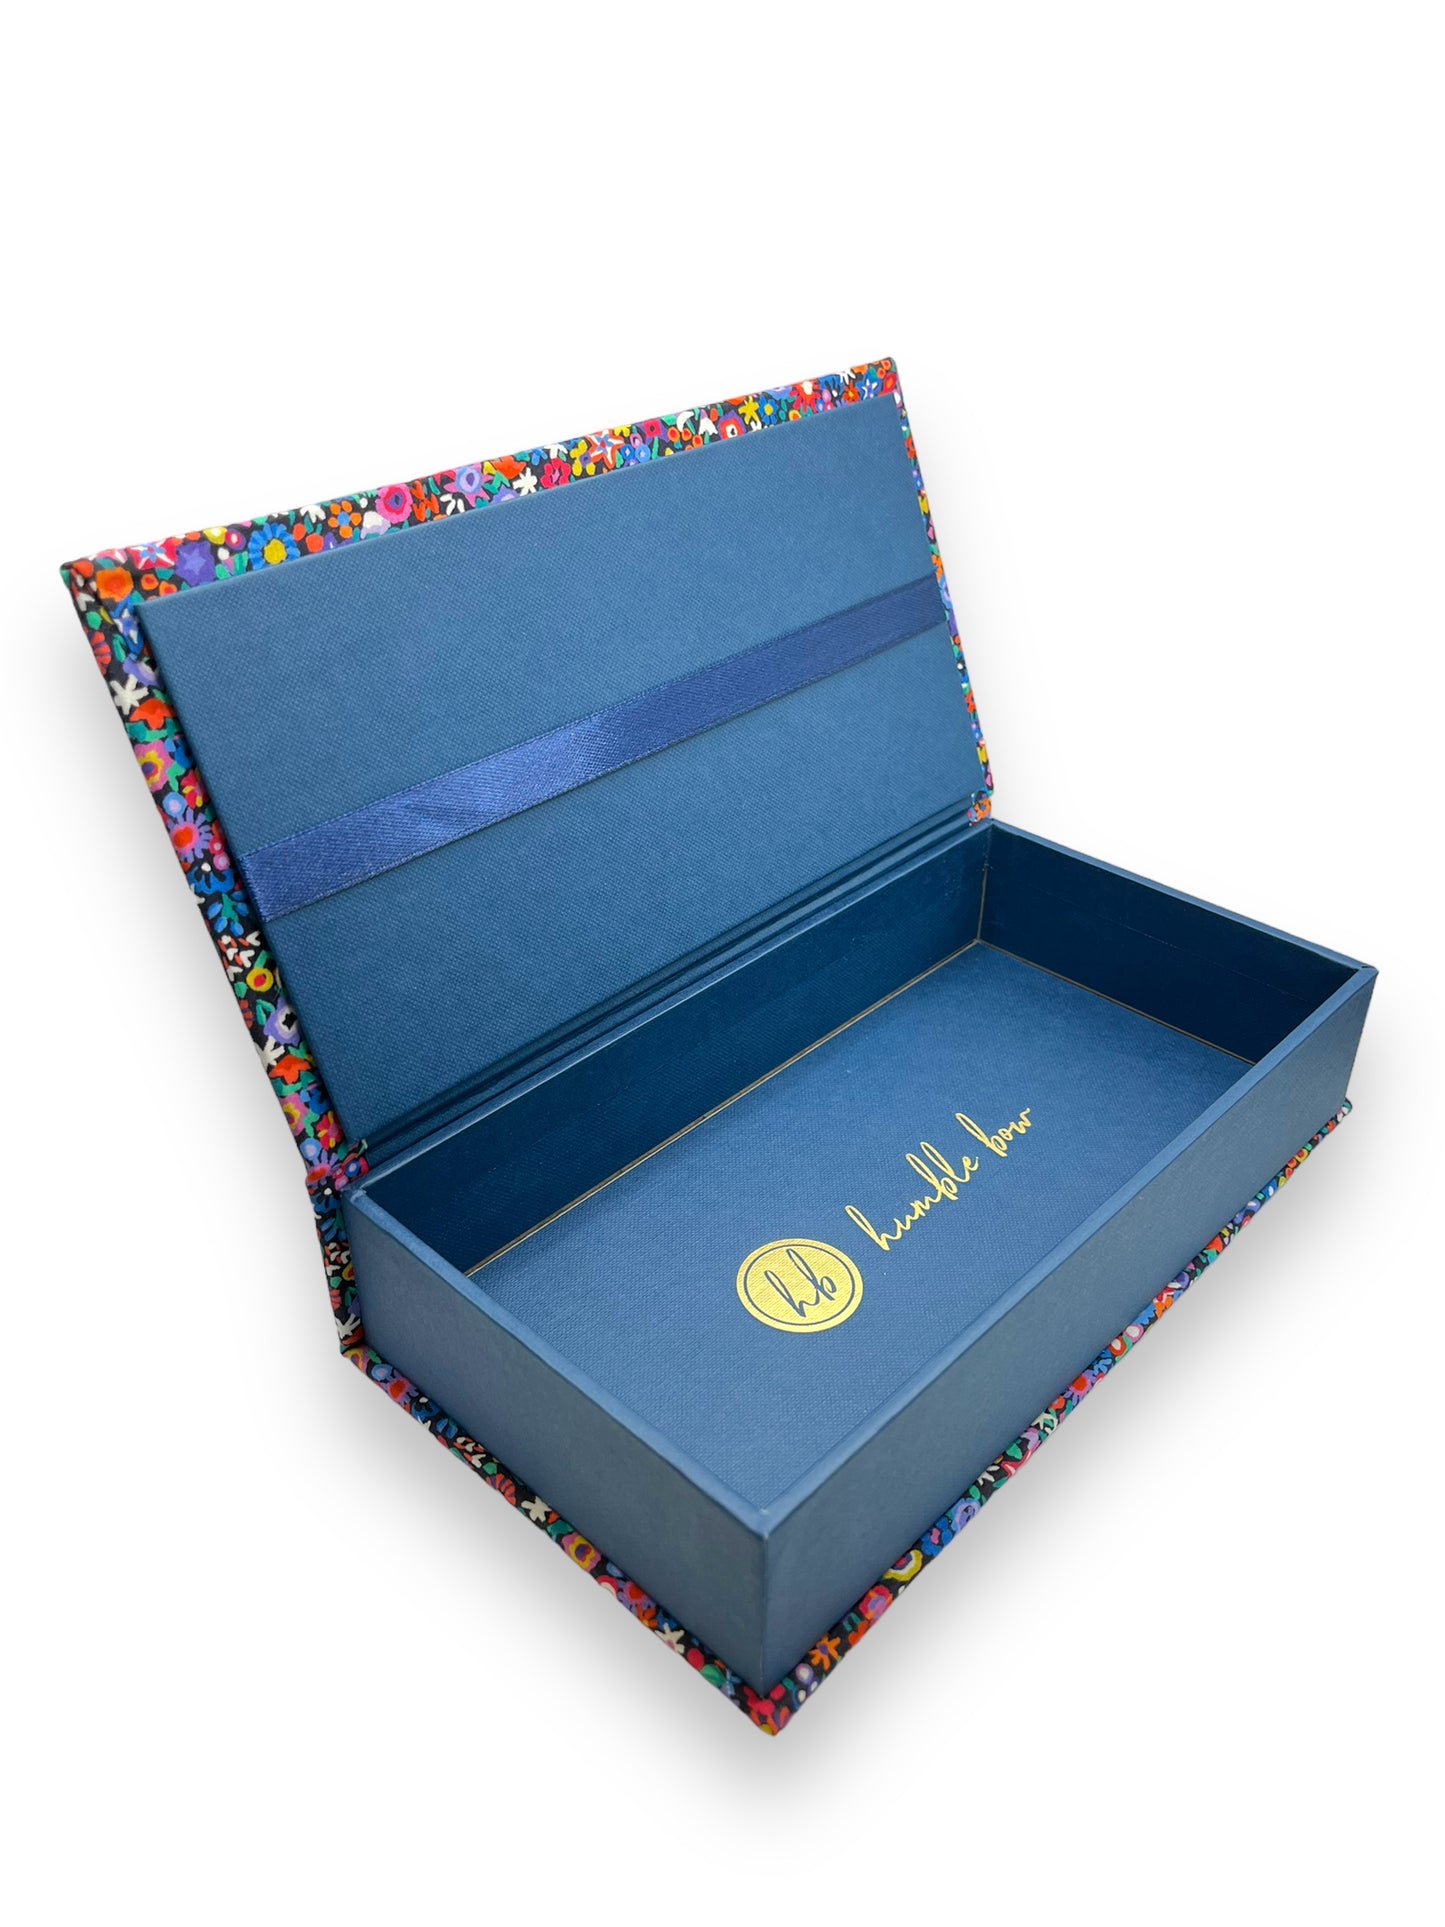 Fabric Wrapped Box - Liberty Dazzle